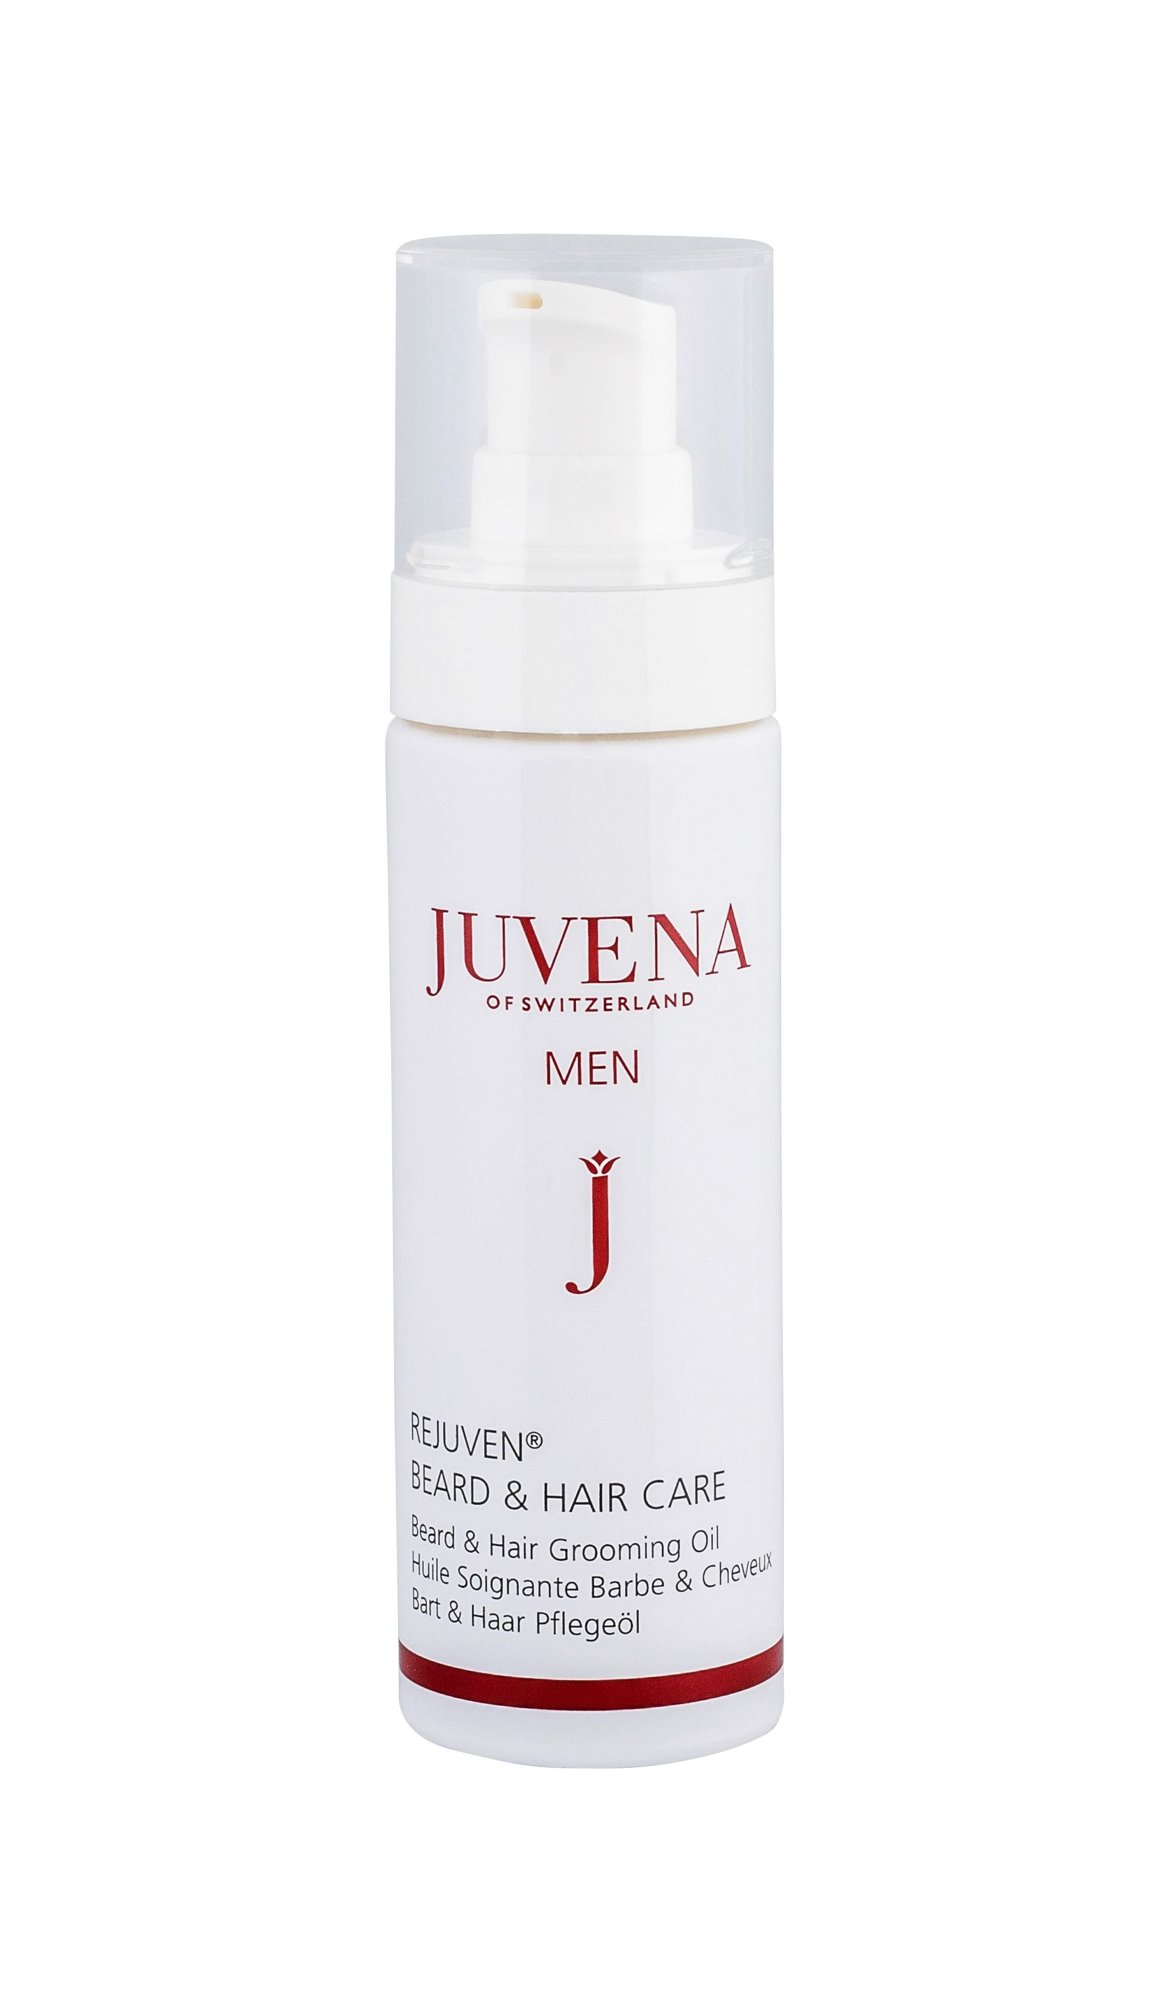 Juvena Rejuven® Men Beard & Hair Grooming Oil 50ml barzdos aliejus